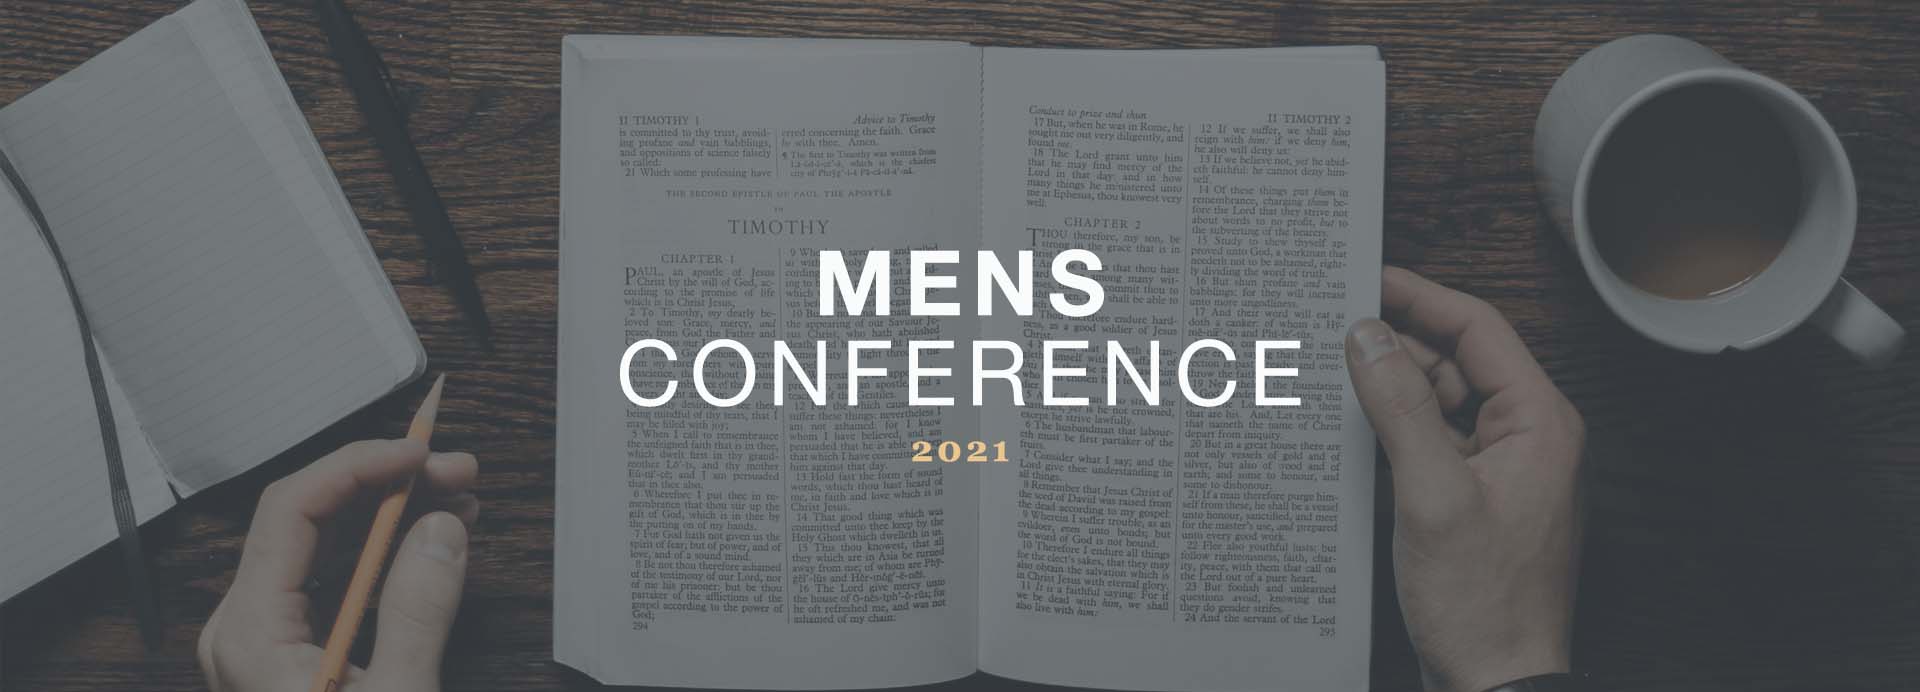 Men's Conference 2021